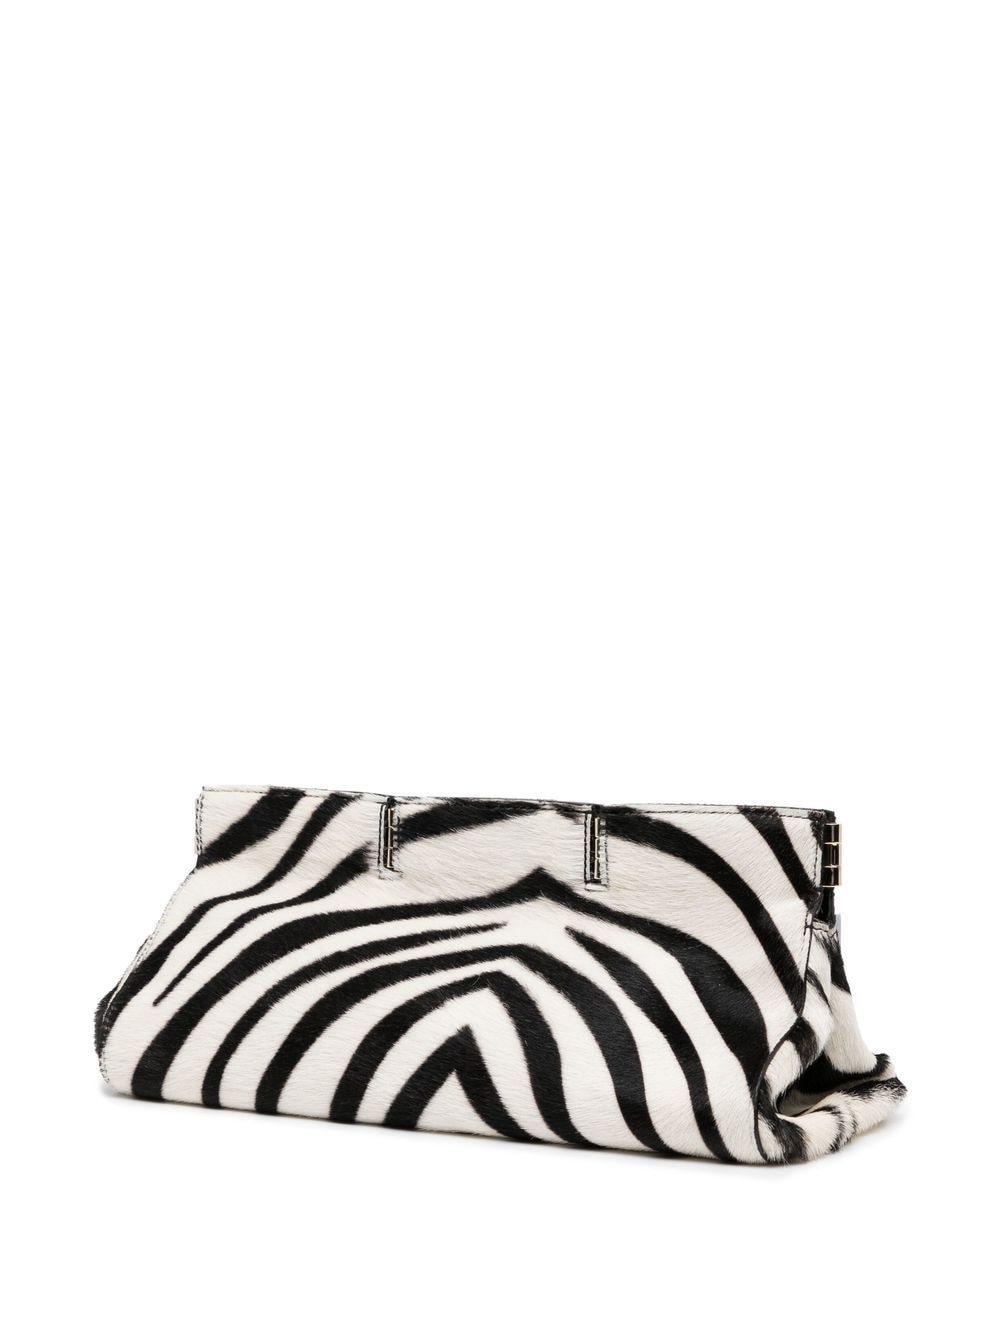 peter do zebra-print leather clutch bag - white